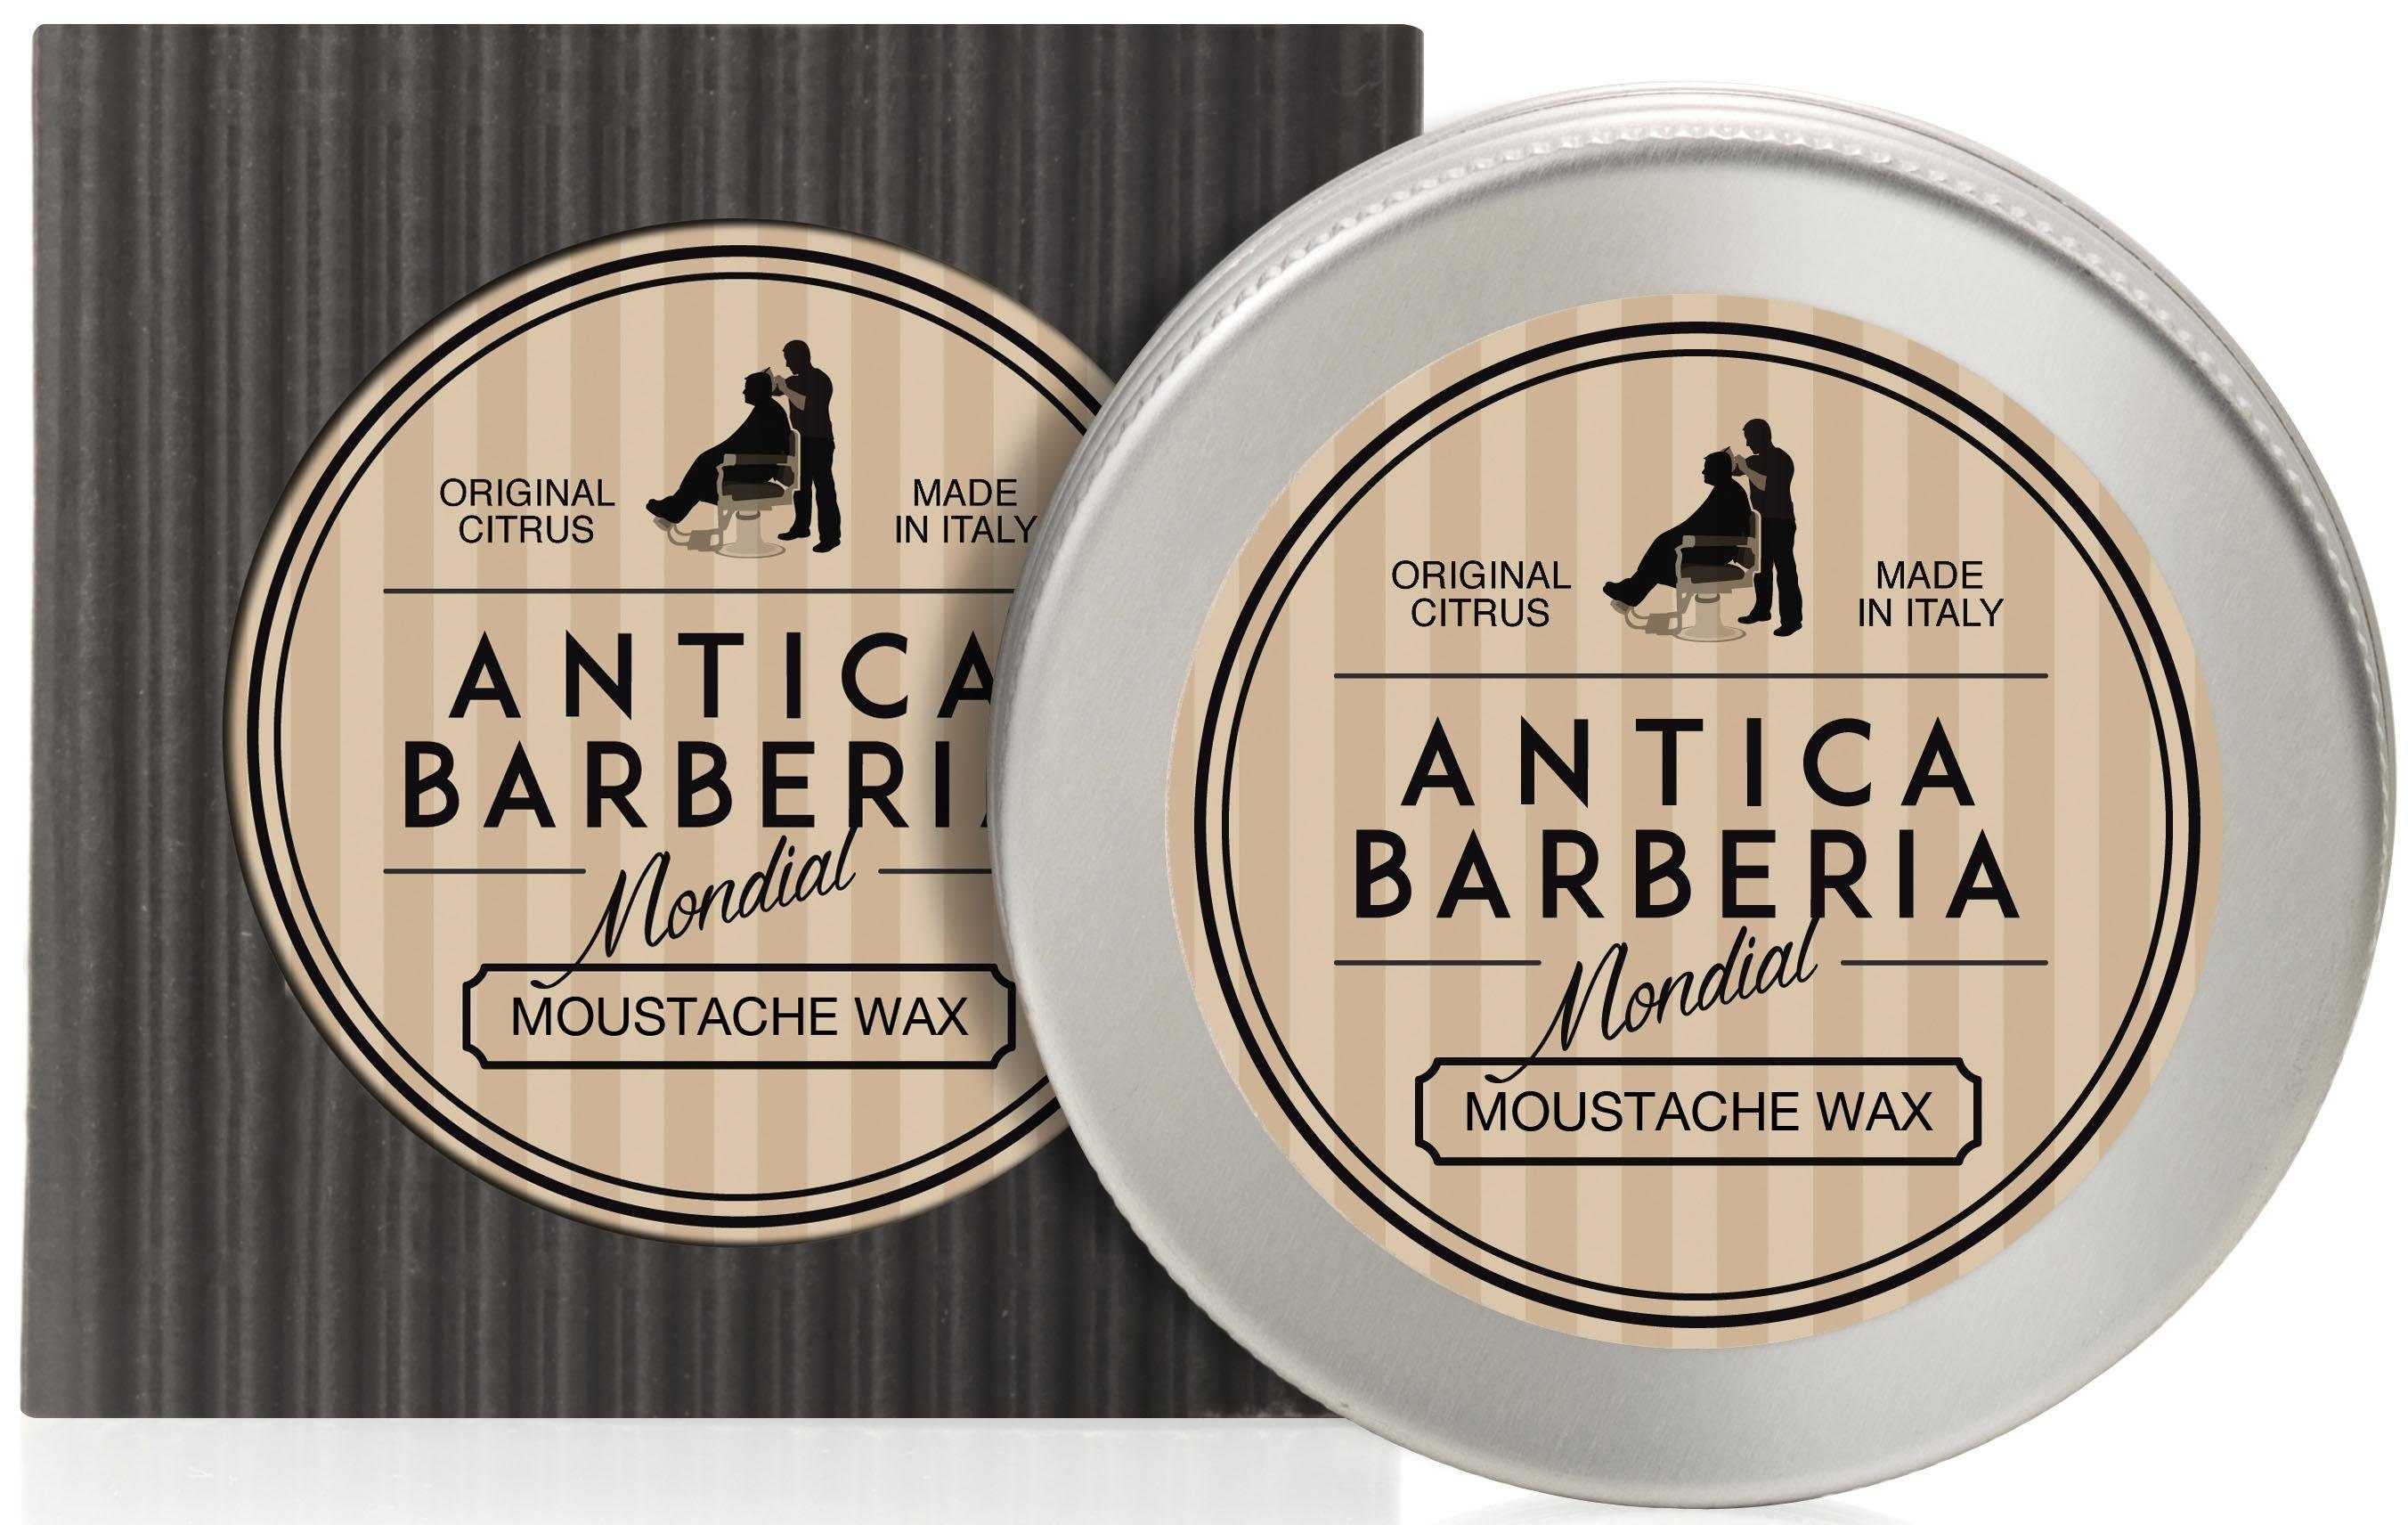 Barberia Wax Moustache Antica Bartwachs Bart-Wax Original Bartstyling, Citrus, Mondial